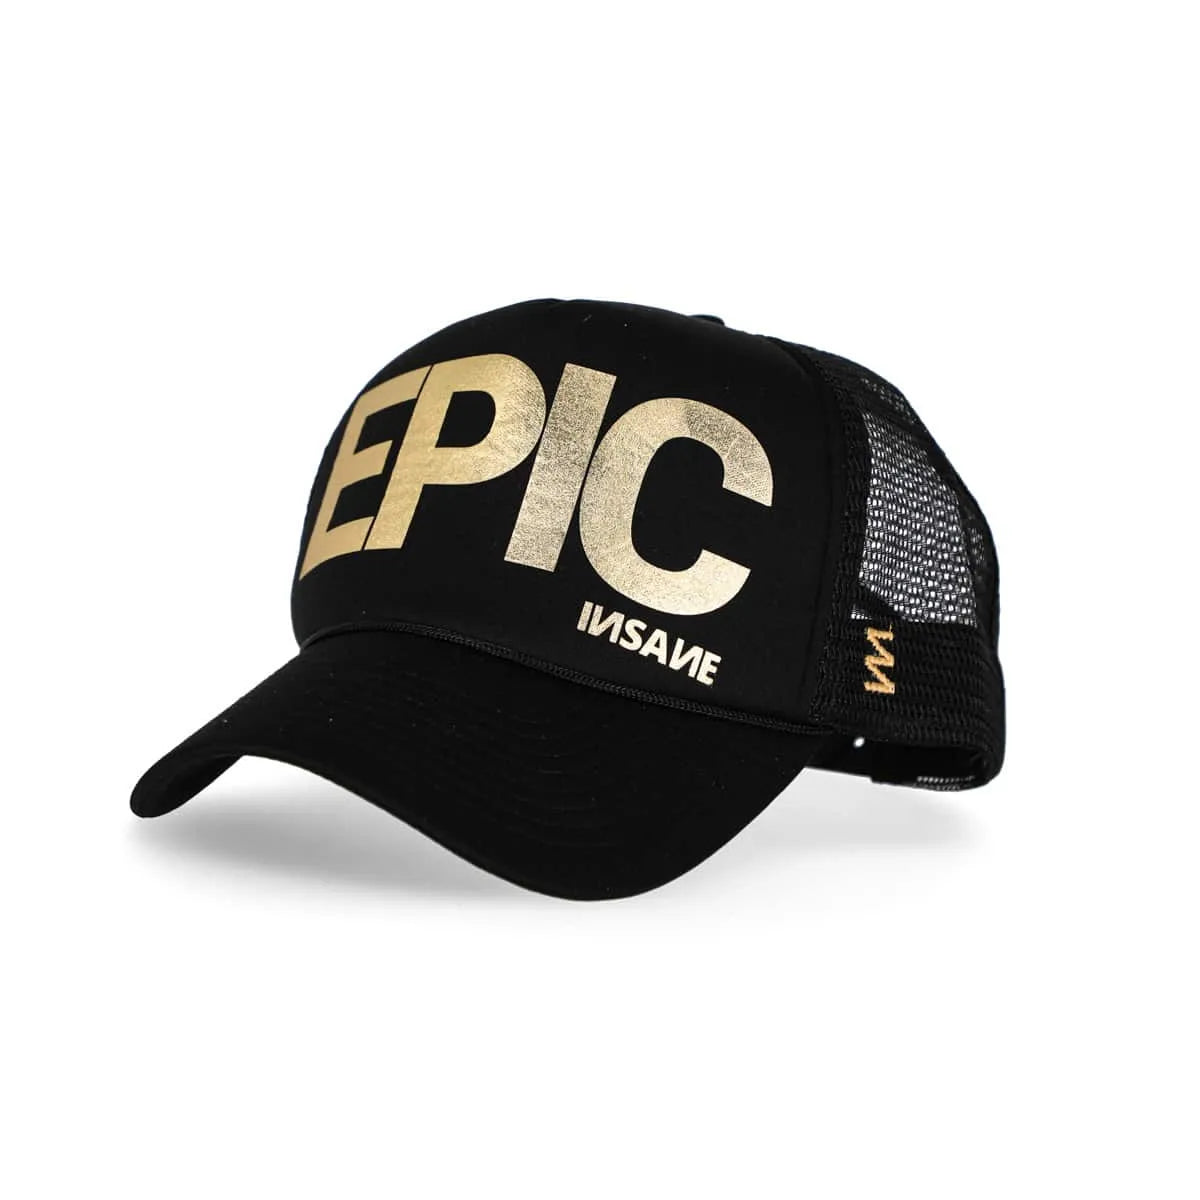 EPIC TRUCKER BLACK & GOLD CAP